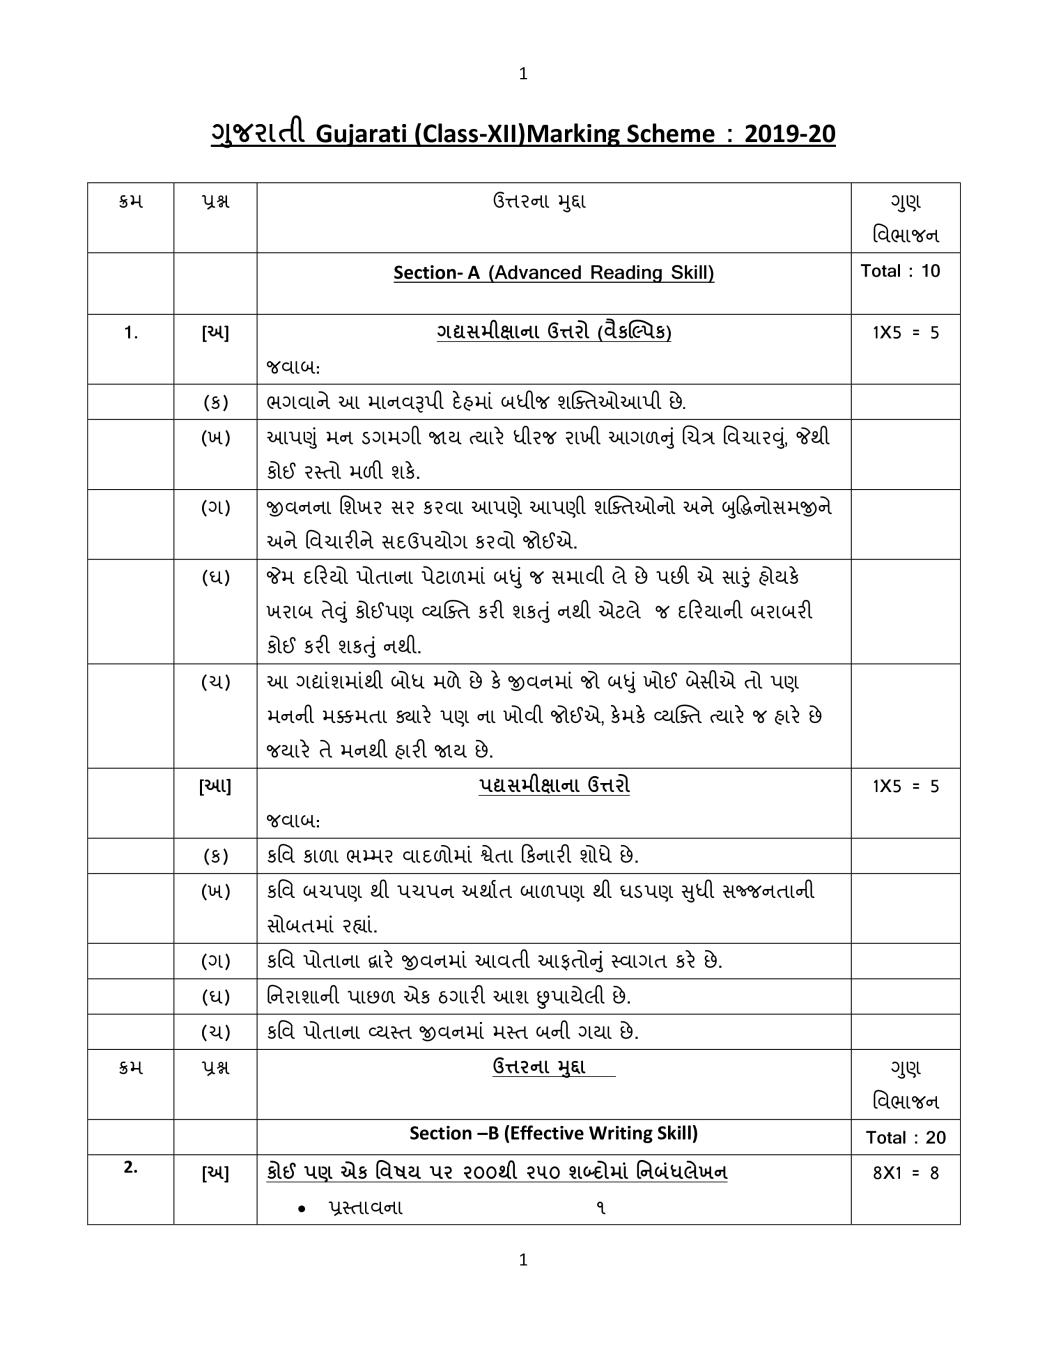 CBSE Class 12 Marking Scheme 2020 for Gujarati - Page 1